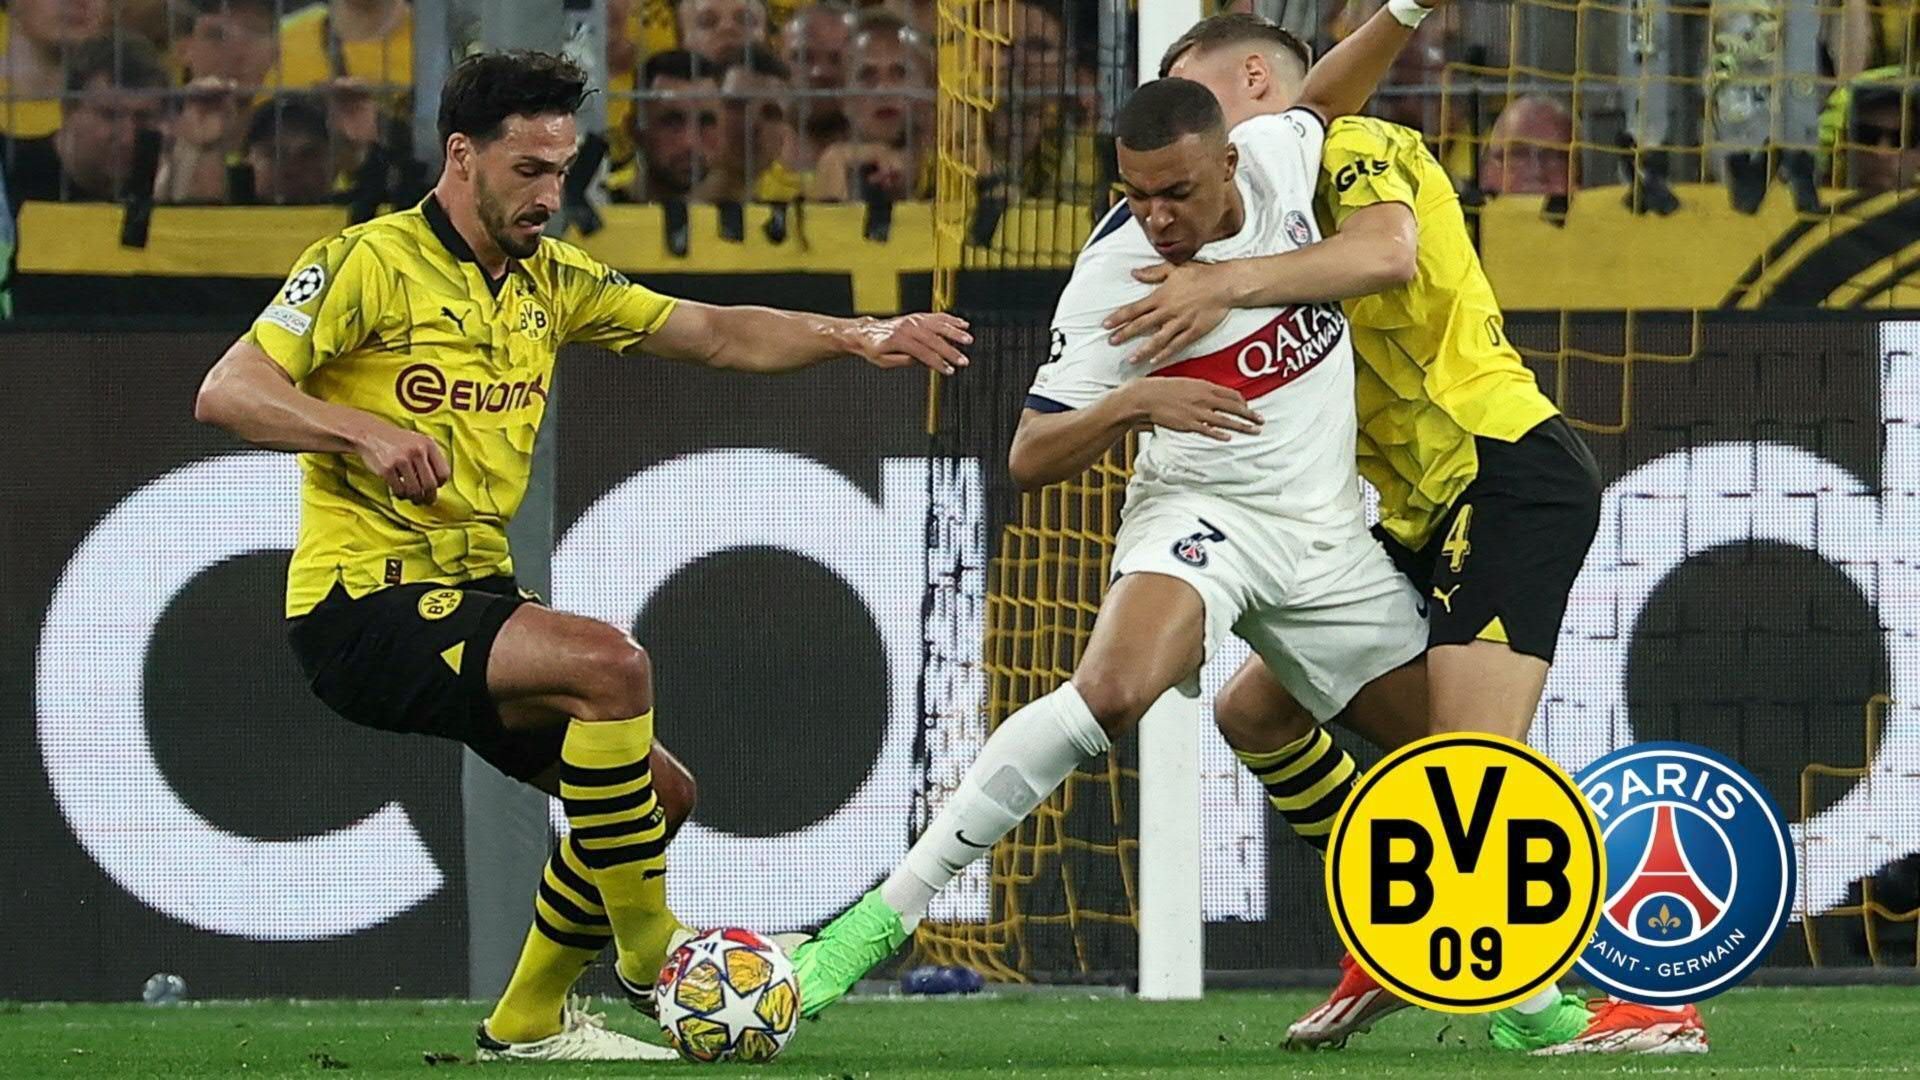 The dream of Wembley lives on: Borussia Dortmund defeats PSG